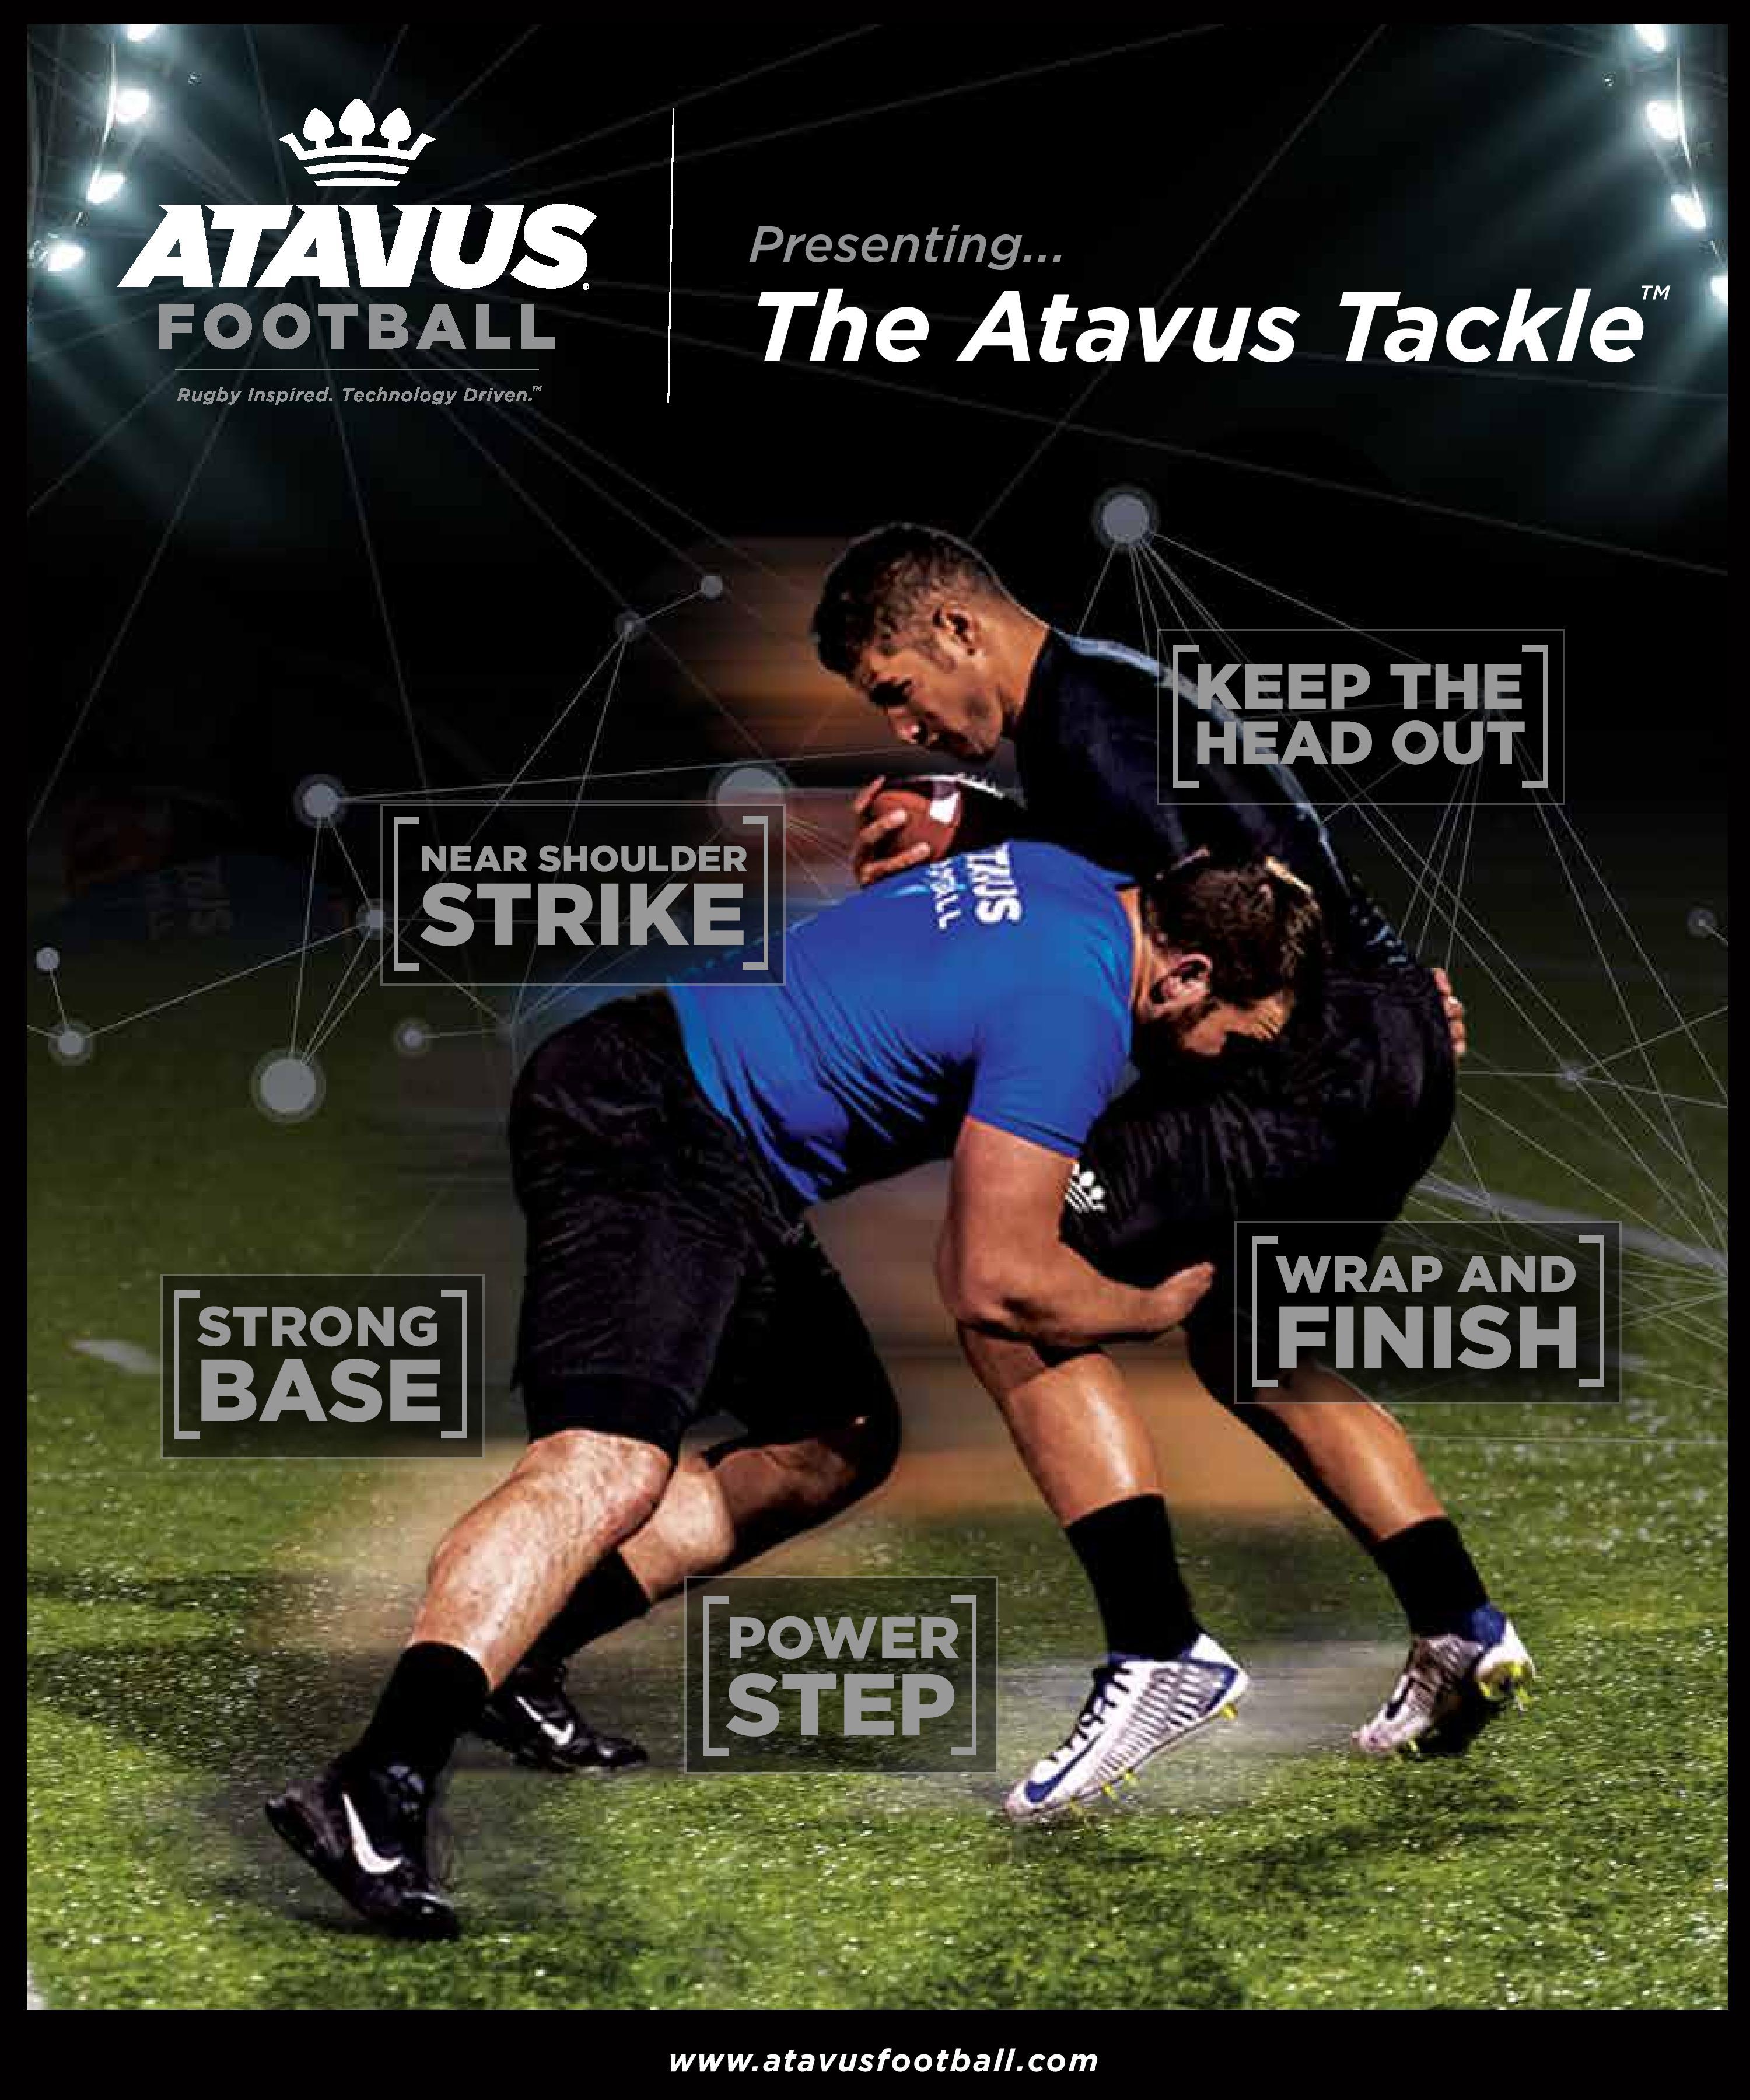 Atavus Football “Raises the Bar” on Tackling Effectiveness and